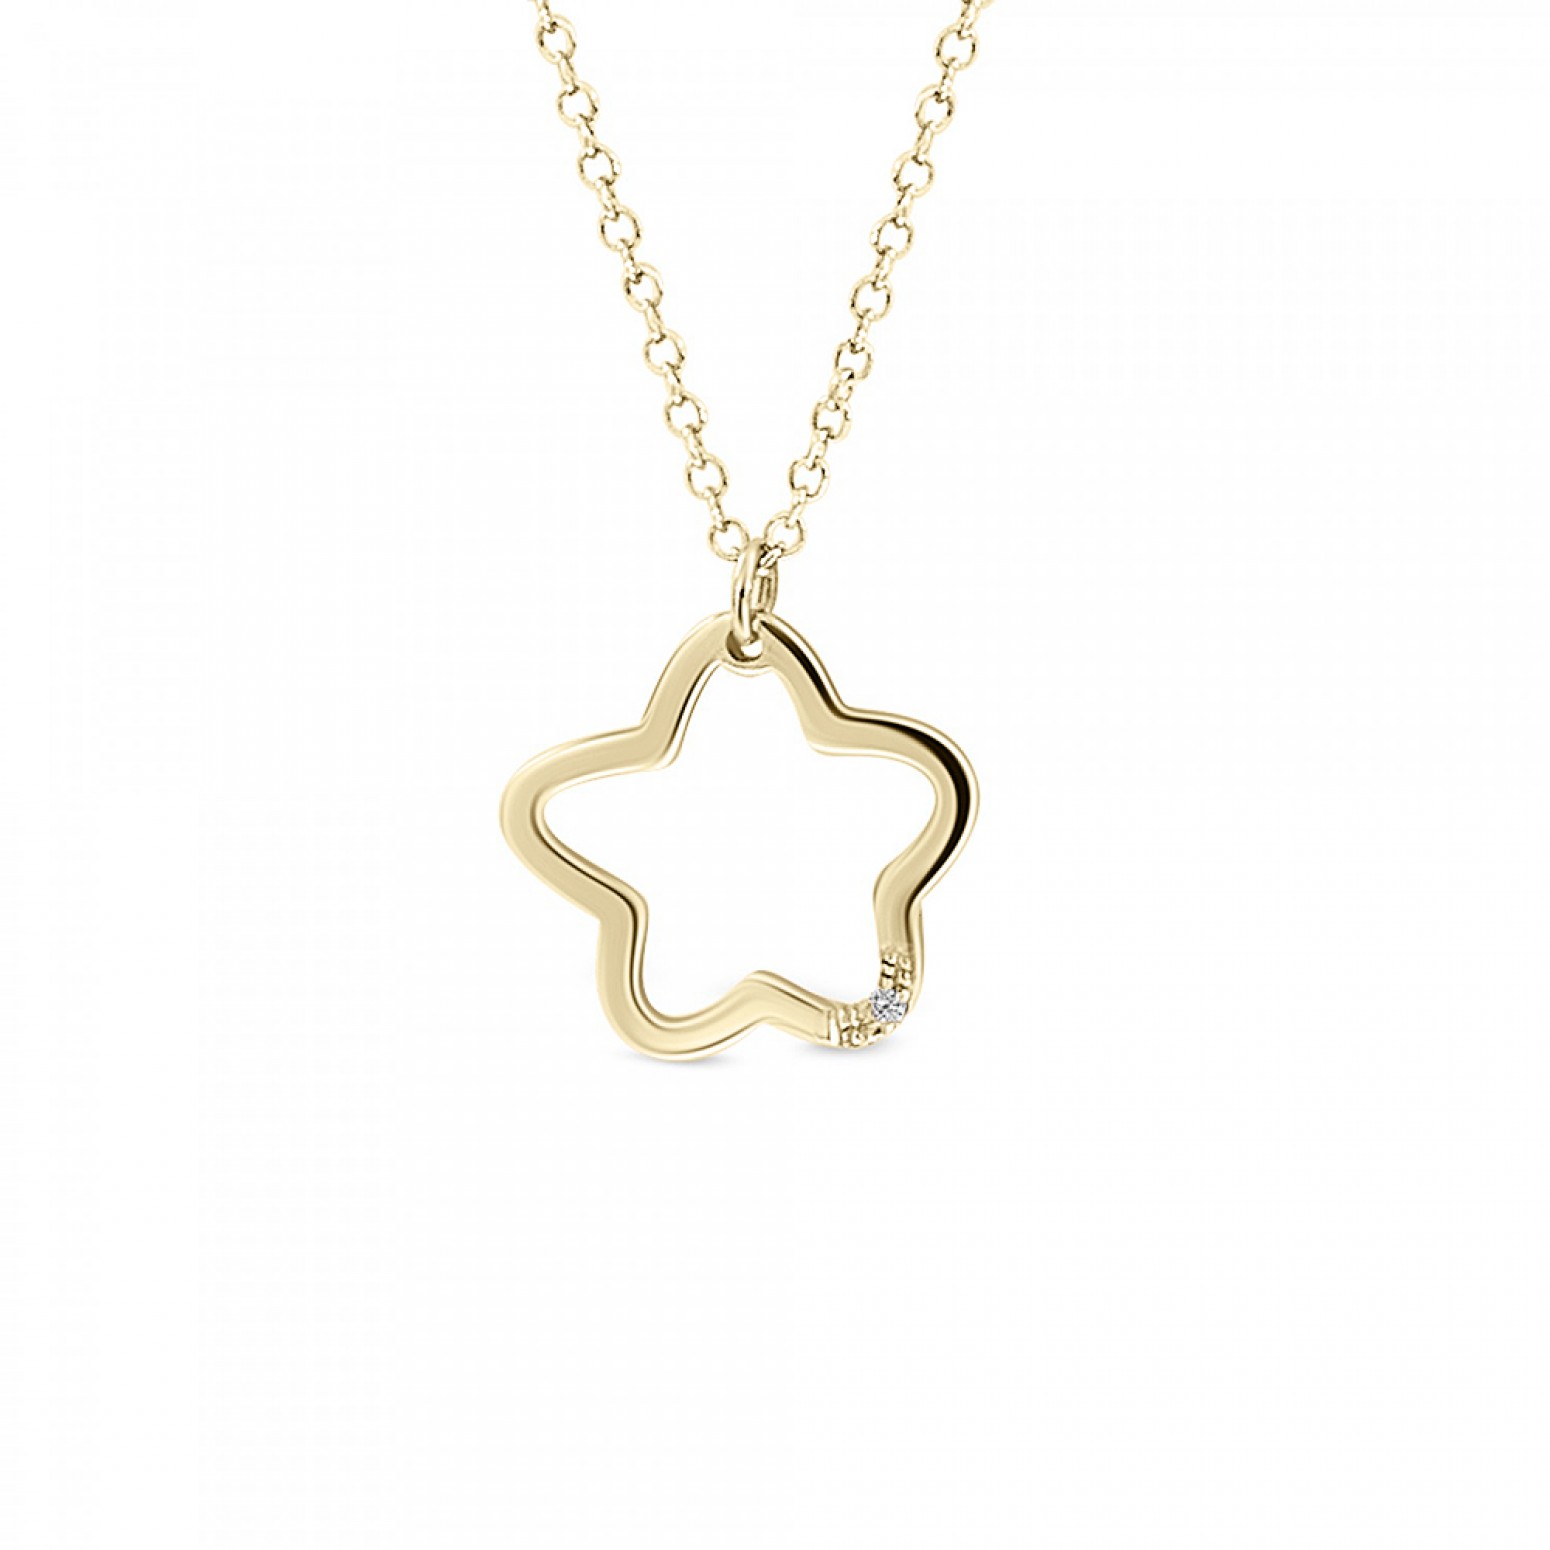 Star necklace, Κ14  gold with diamond 0.005ct, VS2, H ko5313 NECKLACES Κοσμηματα - chrilia.gr